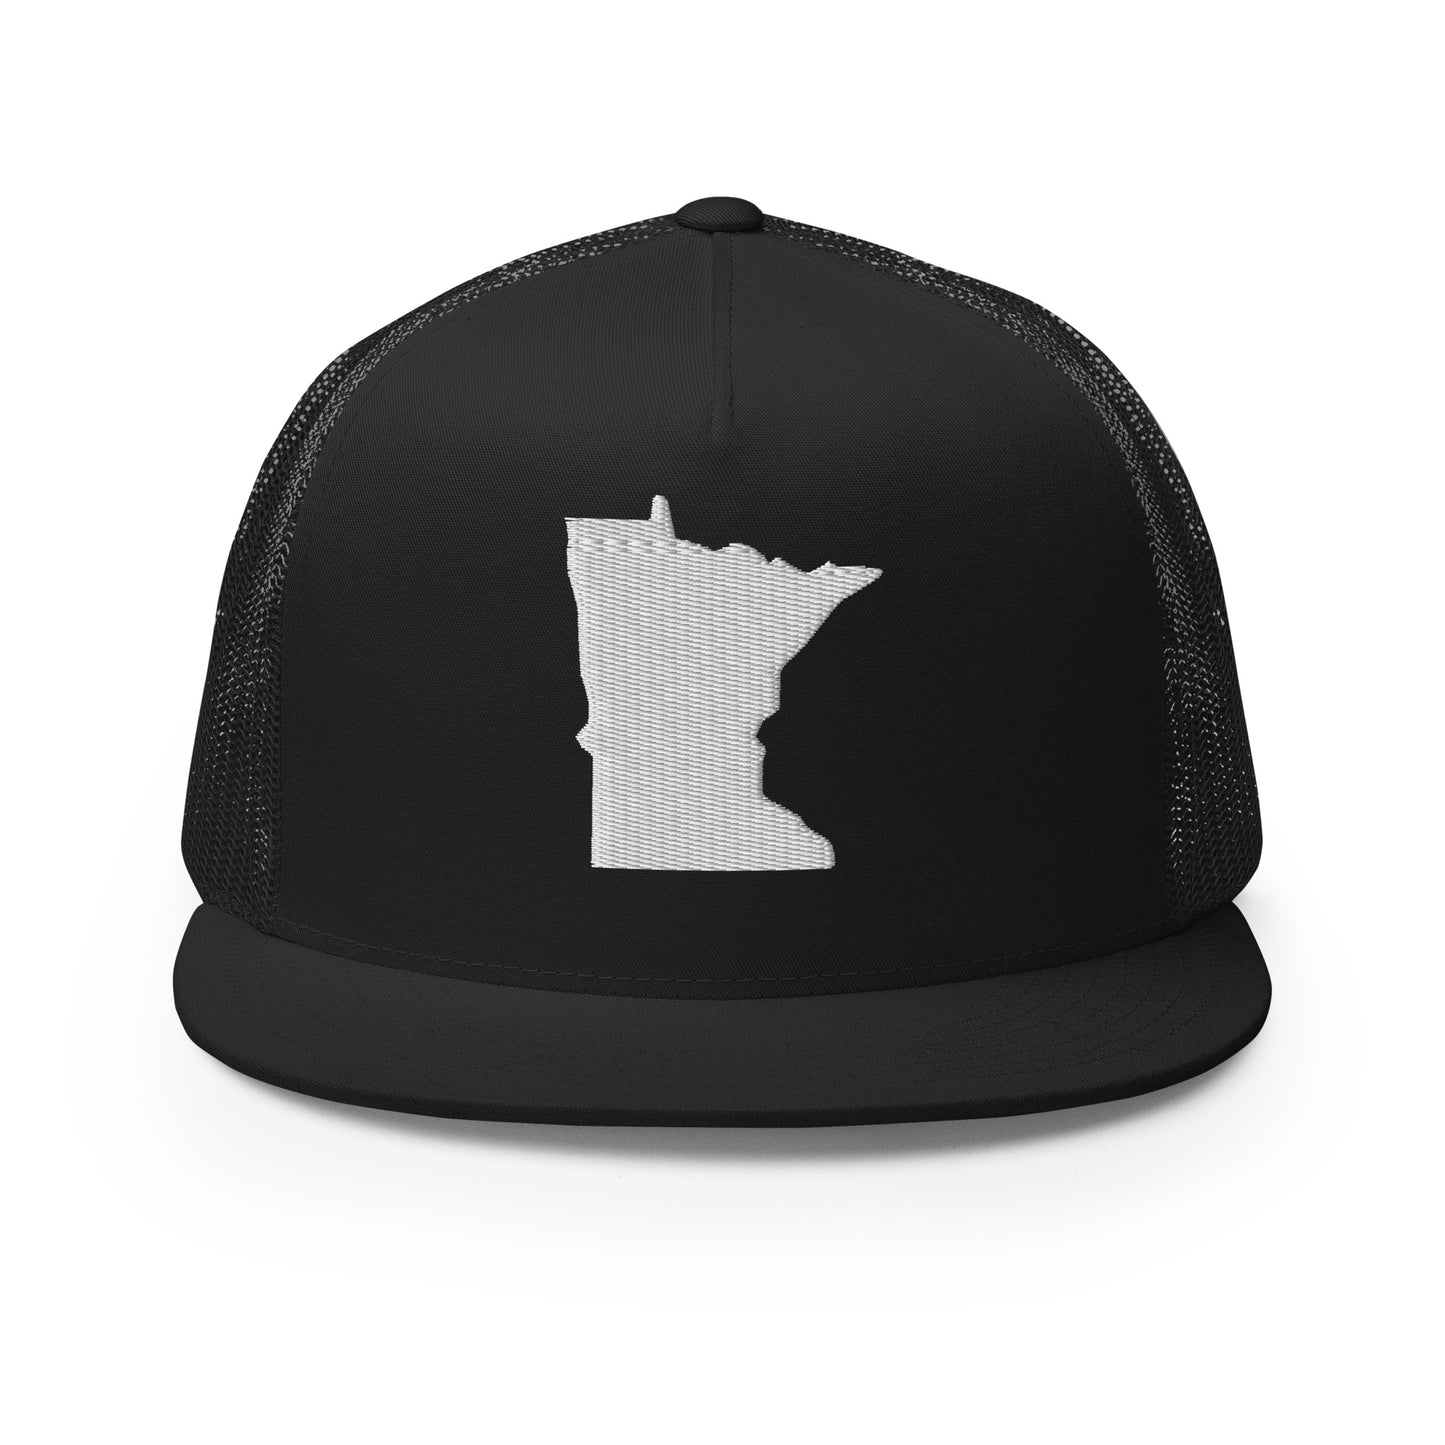 Minnesota State Silhouette High 5 Panel A-Frame Snapback Trucker Hat